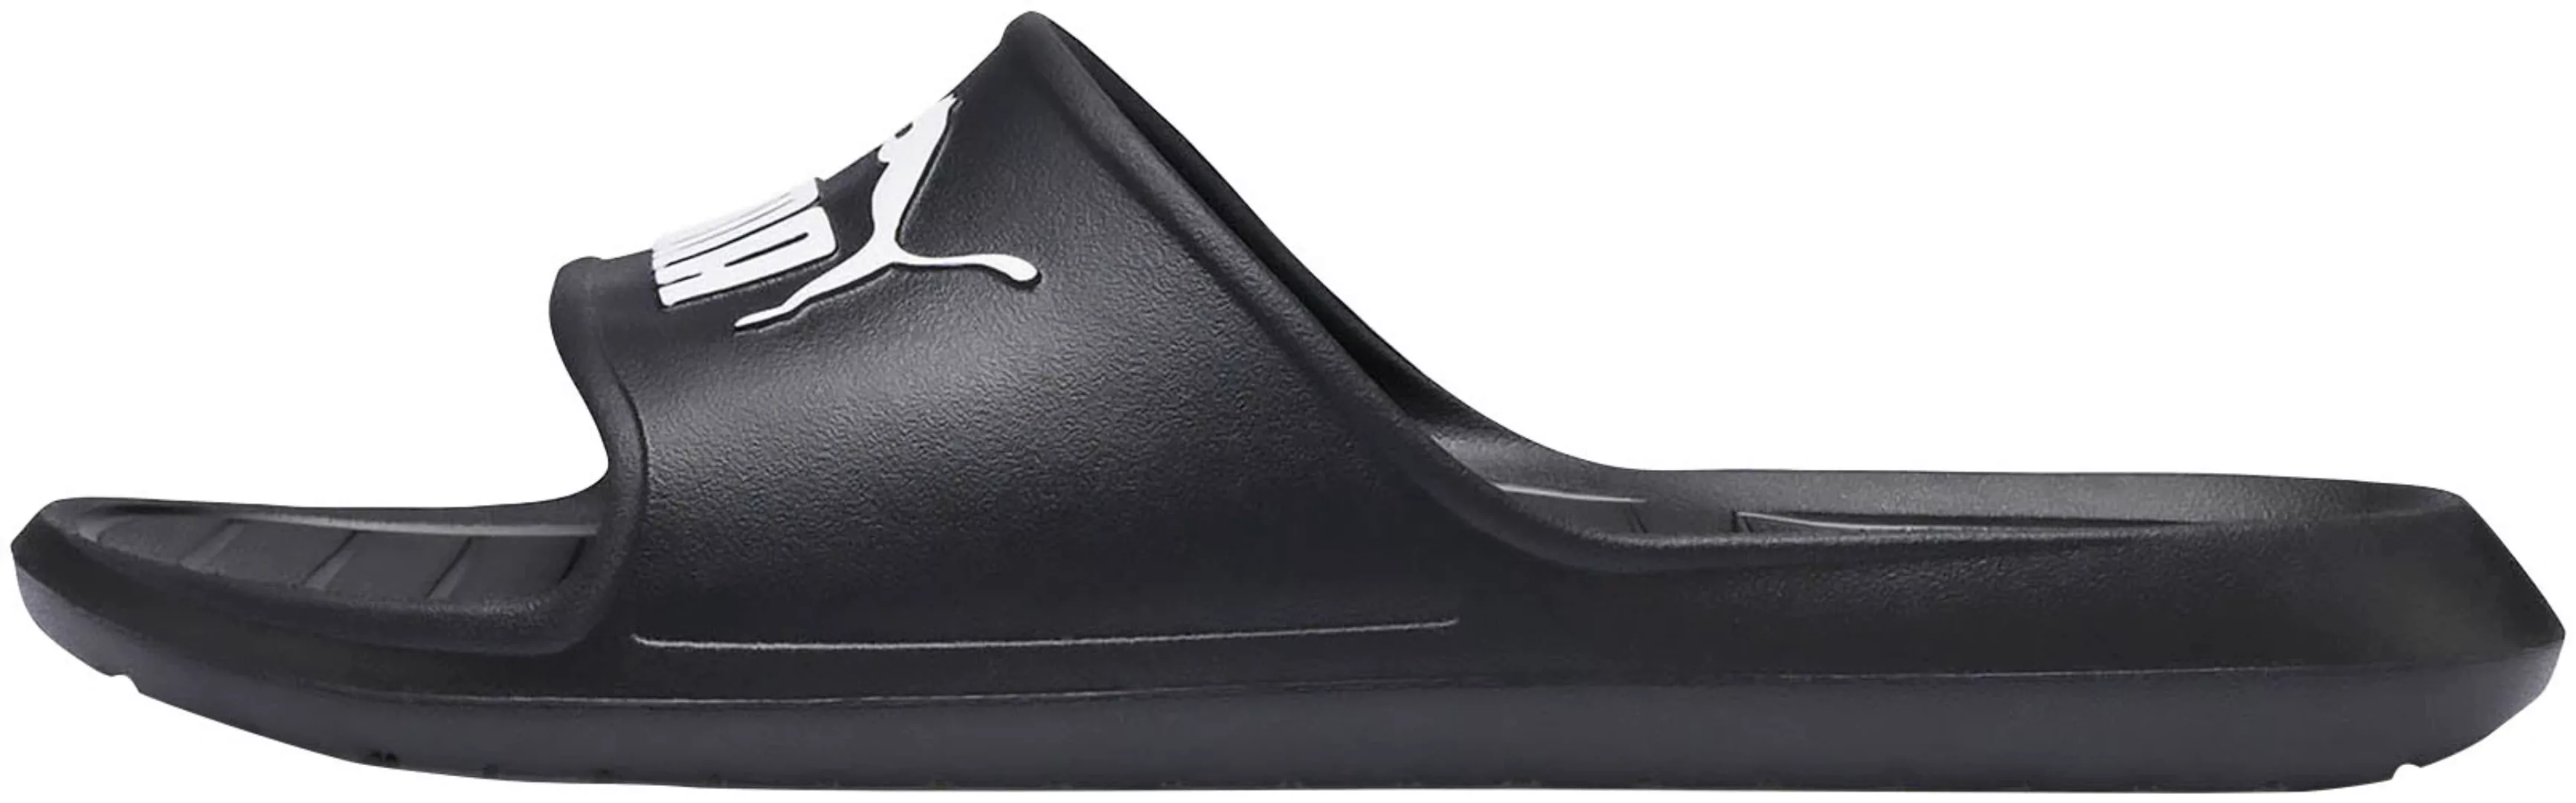 Puma Divecat V2 Schuhe EU 40 1/2 Black günstig online kaufen